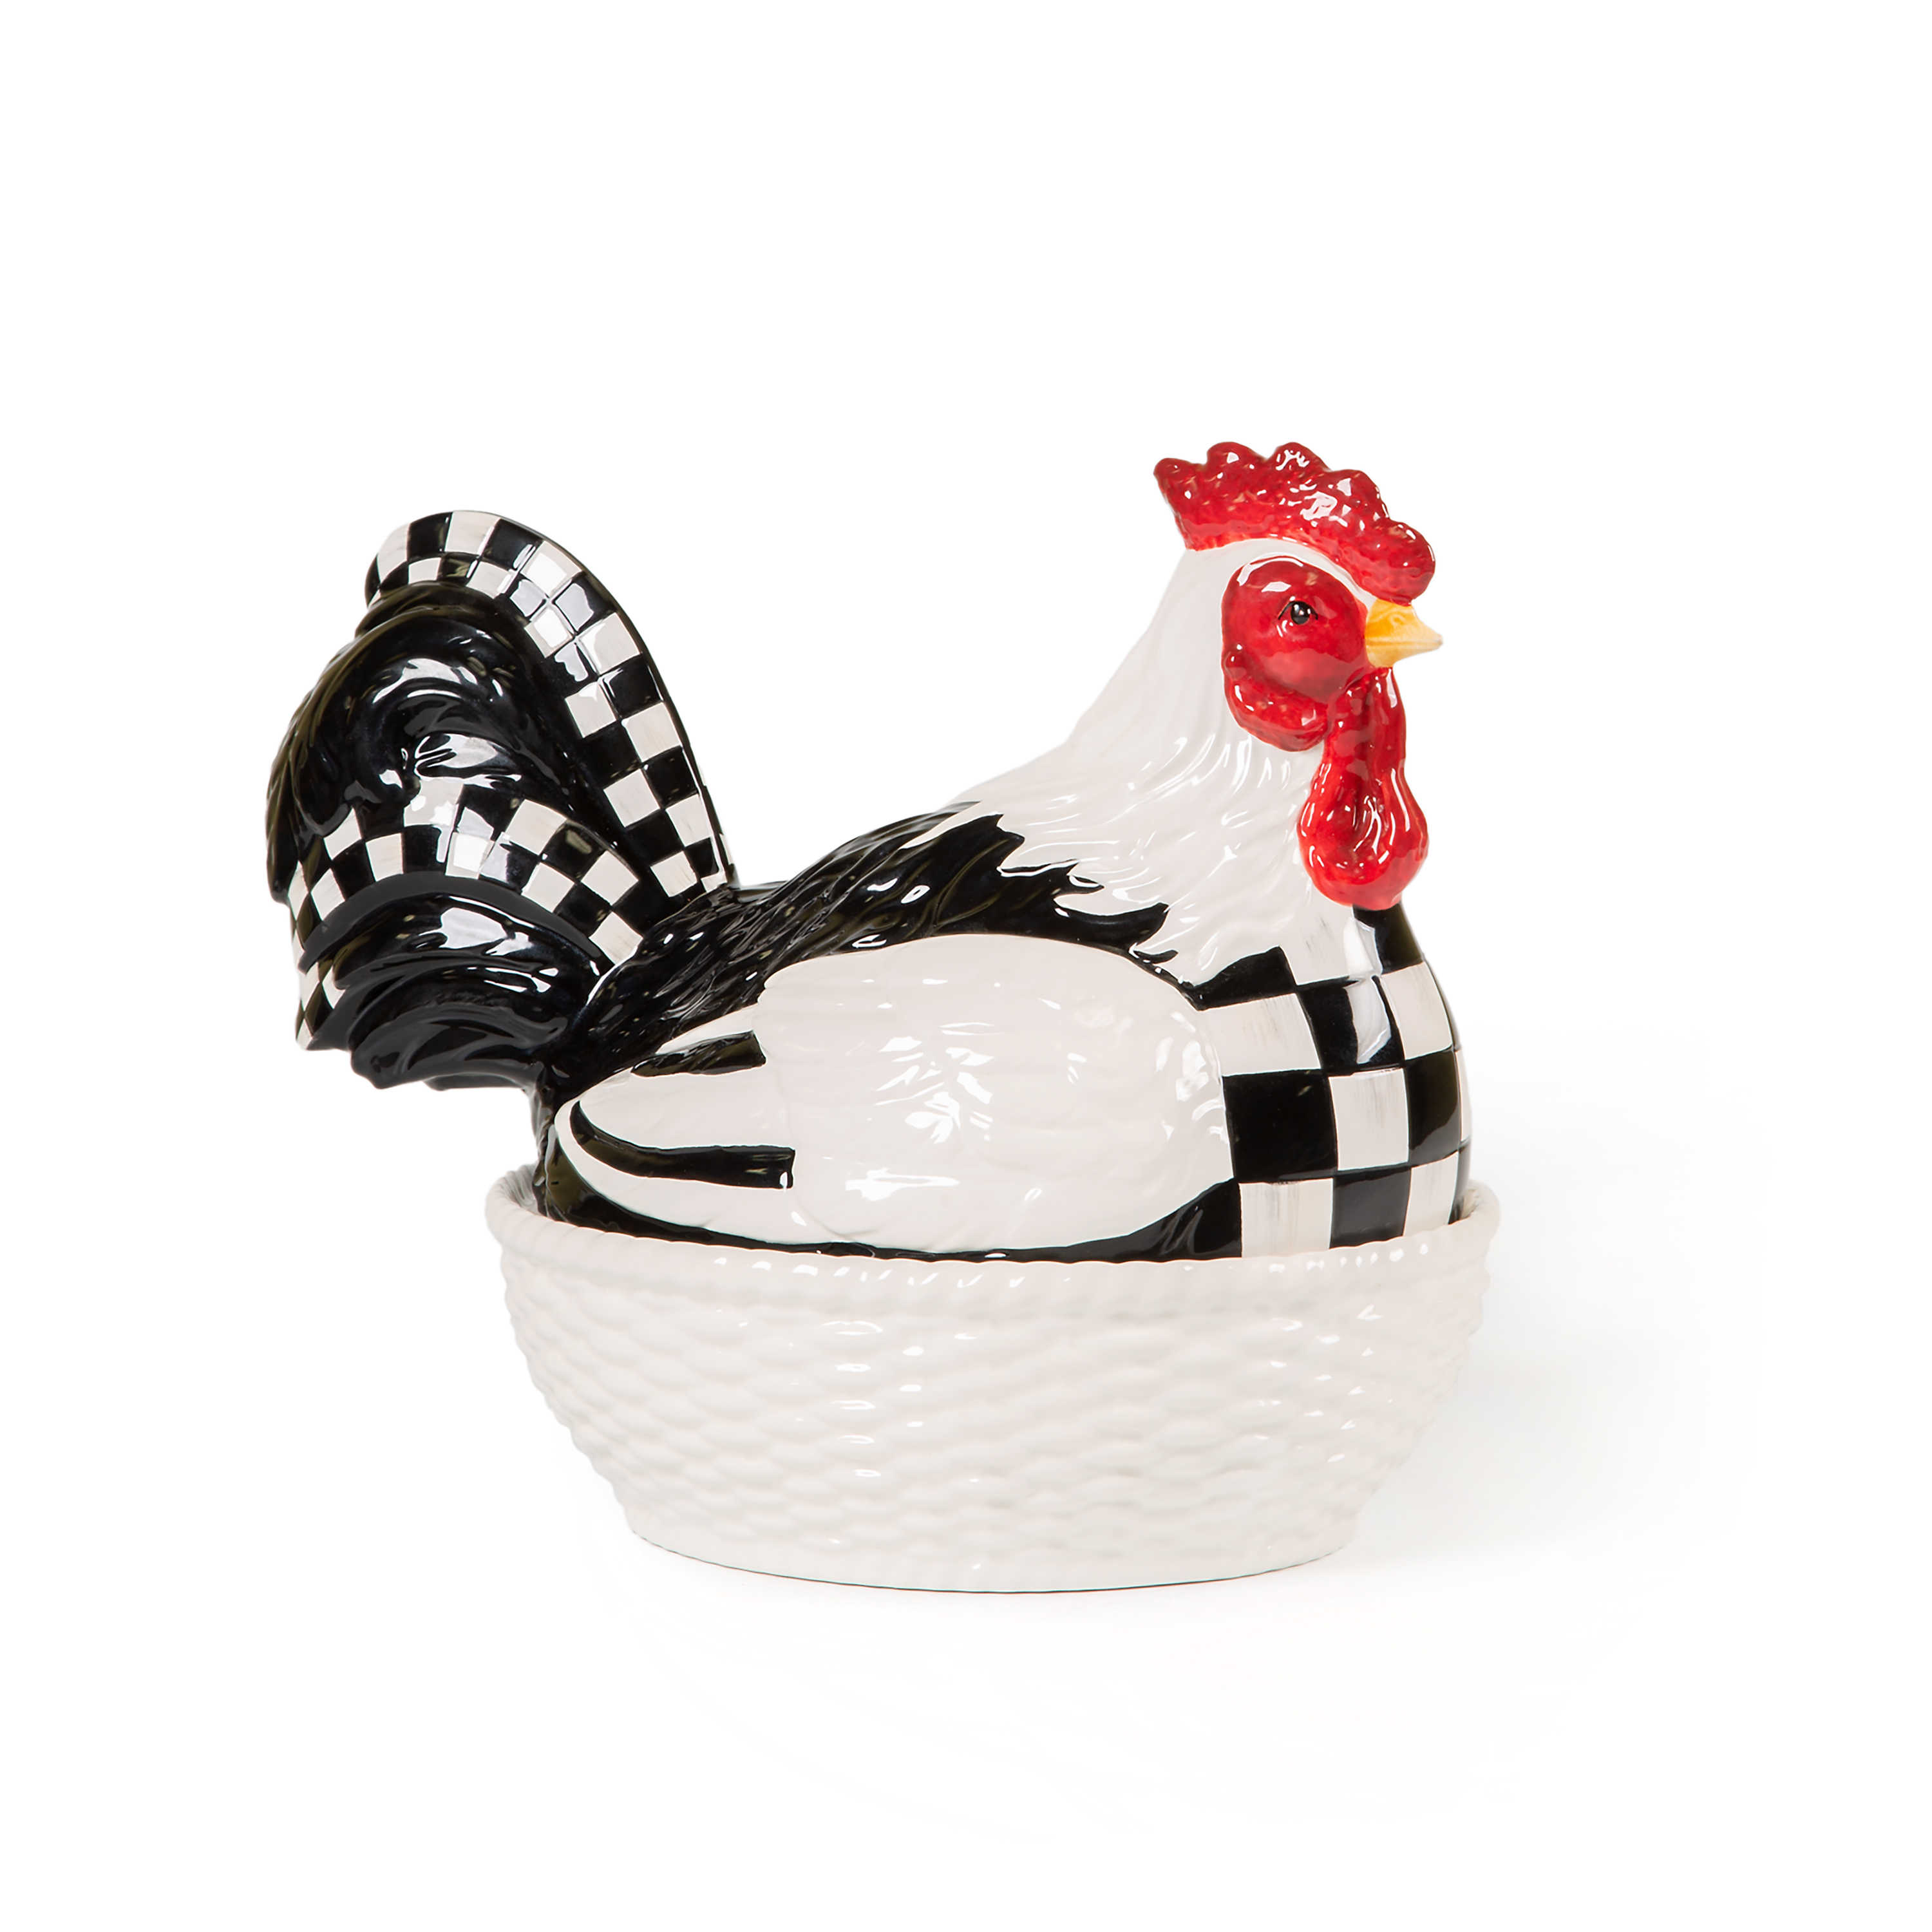 Chicken In A Basket Lidded Dish mackenzie-childs Panama 0